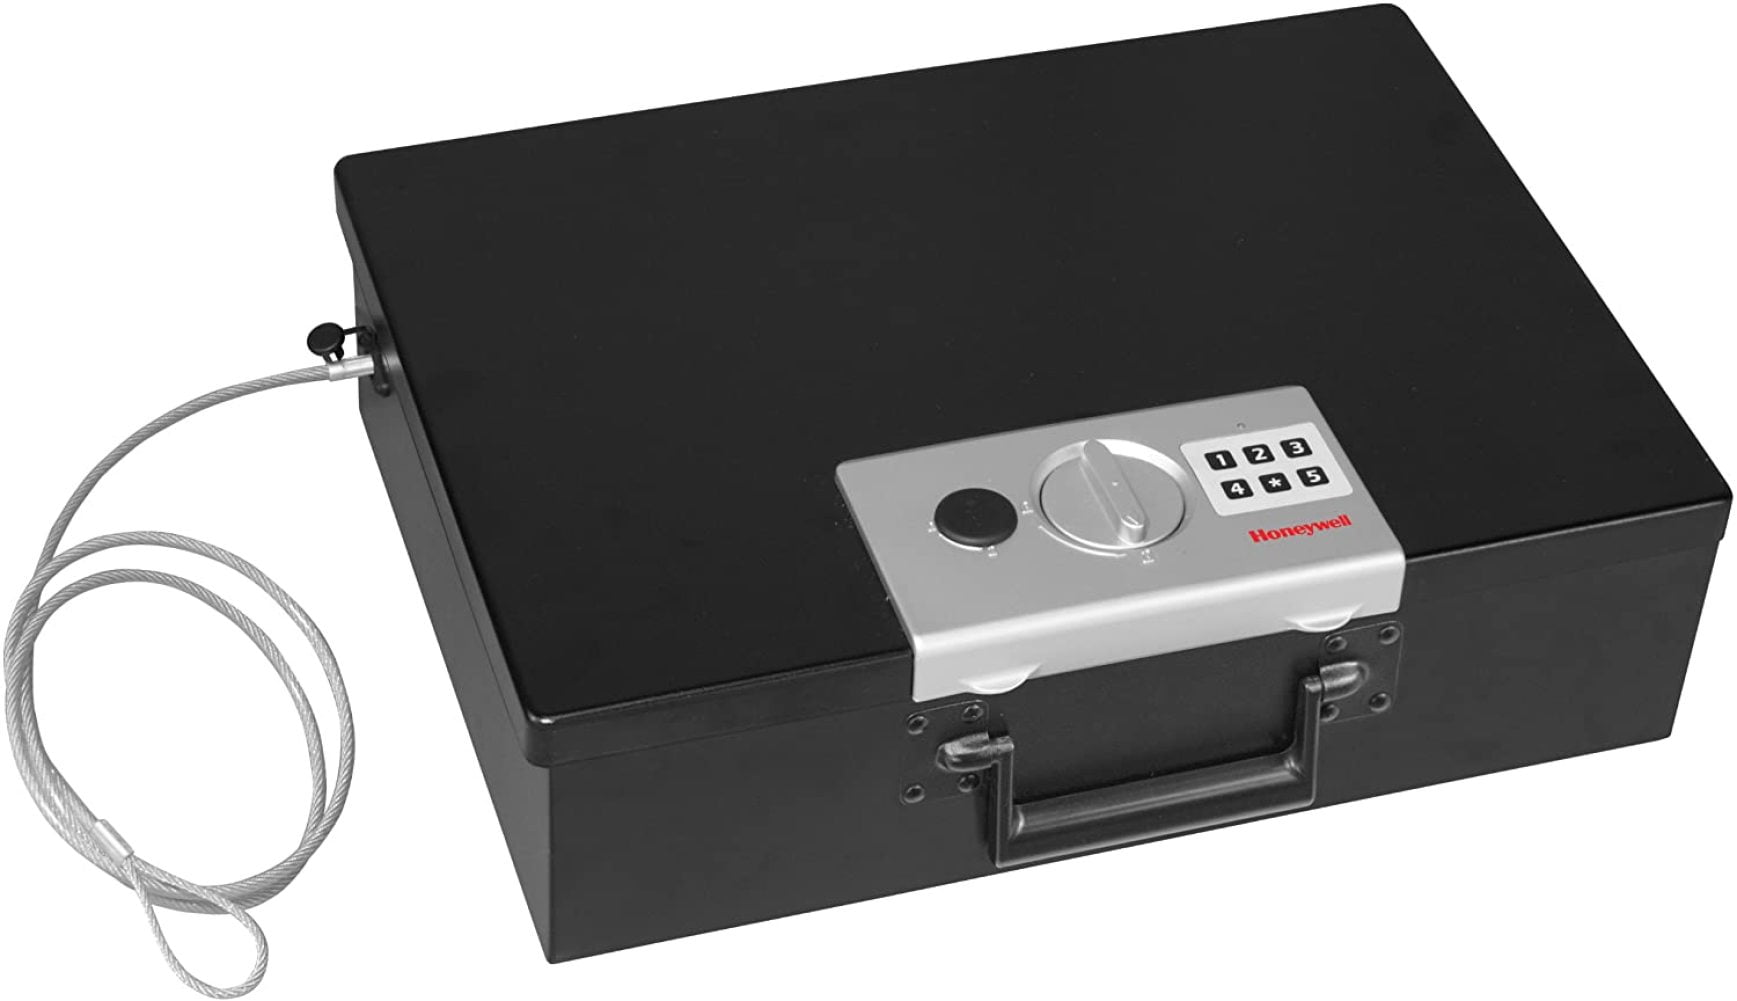 6104 Fire Resistant Steel Security Safe Box with Honeywell Safes & Door Locks 